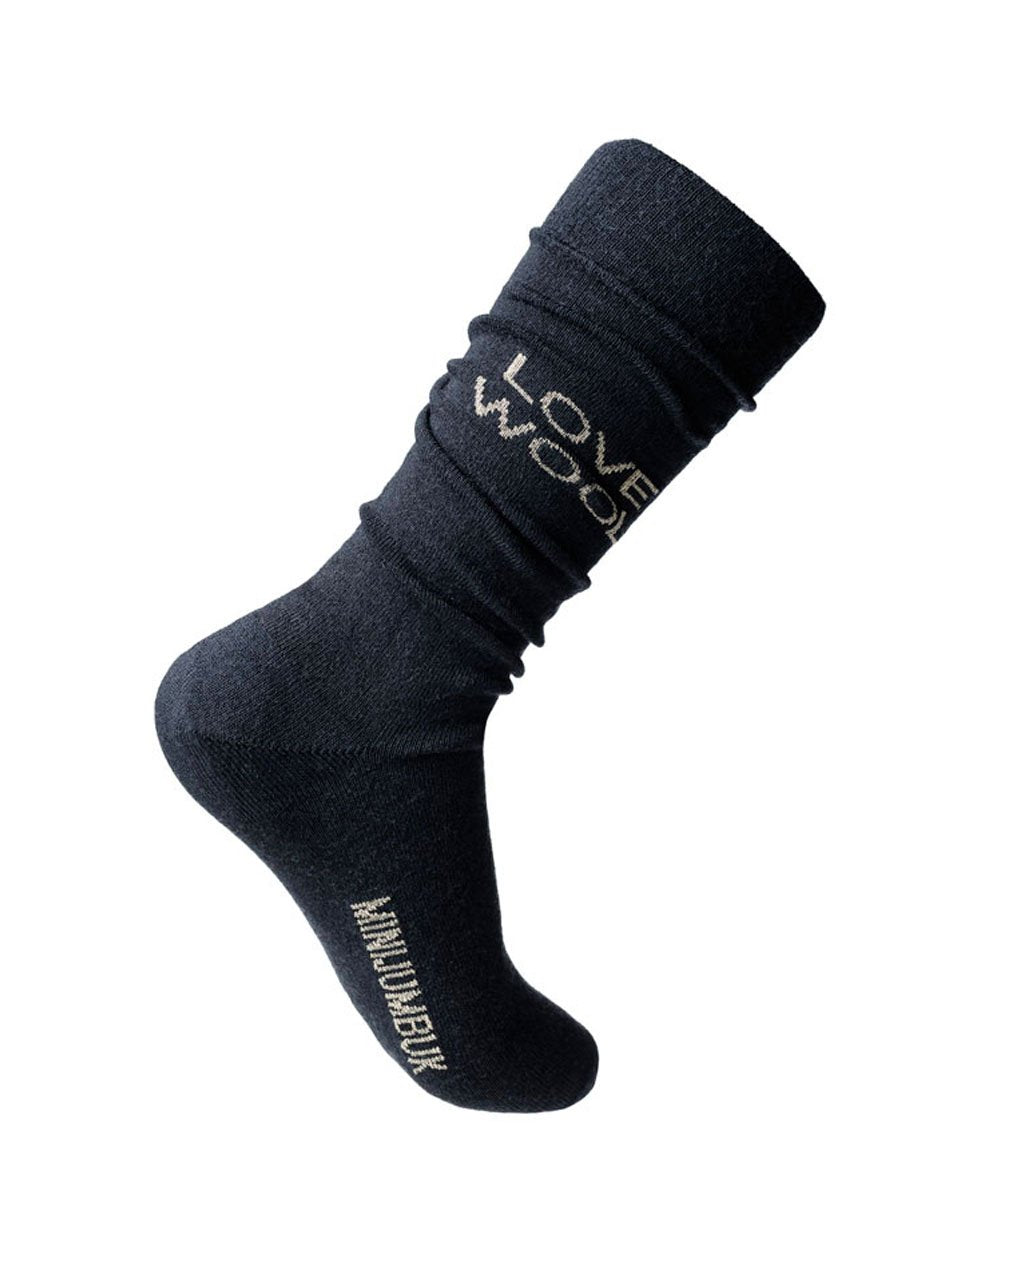 MiniJumbuk Love Wool Sock 